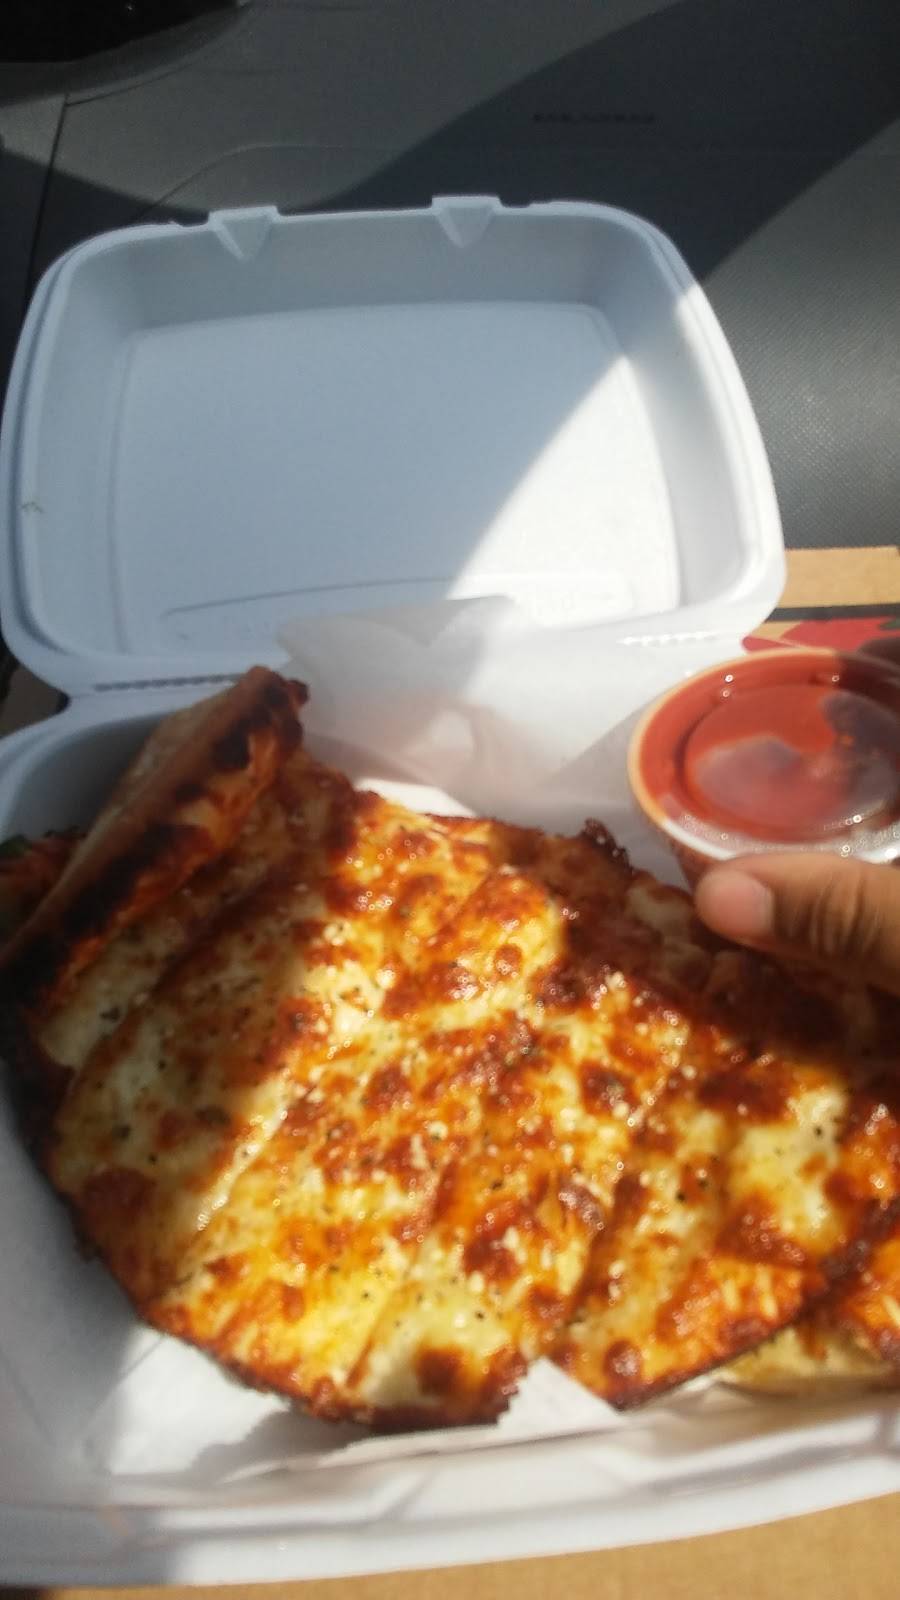 Georgios Oven Fresh Pizza | 3888 W 130th St, Cleveland, OH 44111, USA | Phone: (216) 671-3800